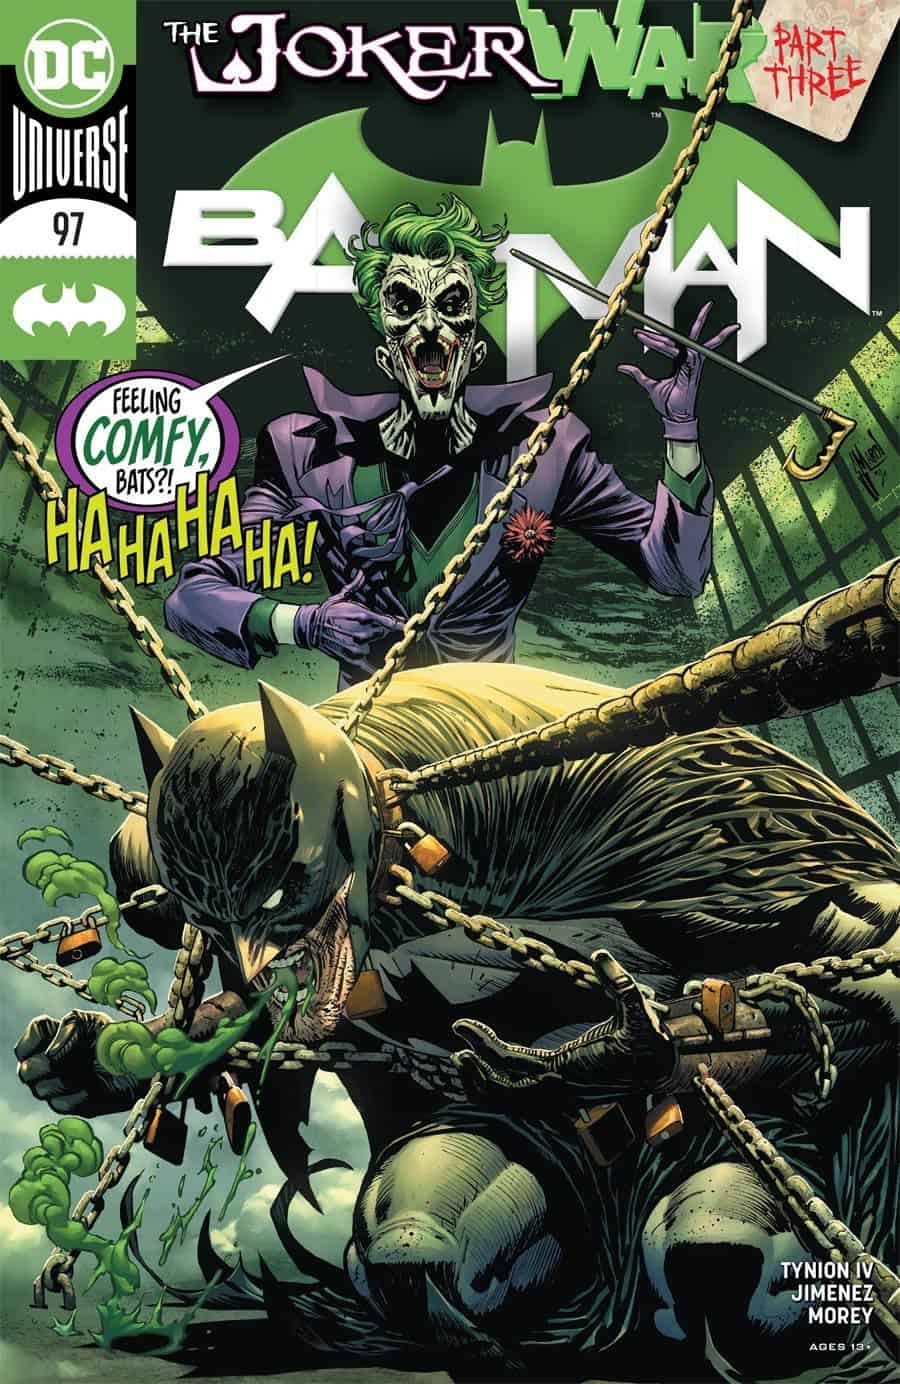 DC Comics Universe & Batman #97 Spoilers & Review: Joker War Part 3 Sees Batman  Defeated, Clownhunter's Emergence, Punchline Vs. Harley Quinn Round 2  Teased & More! – Inside Pulse